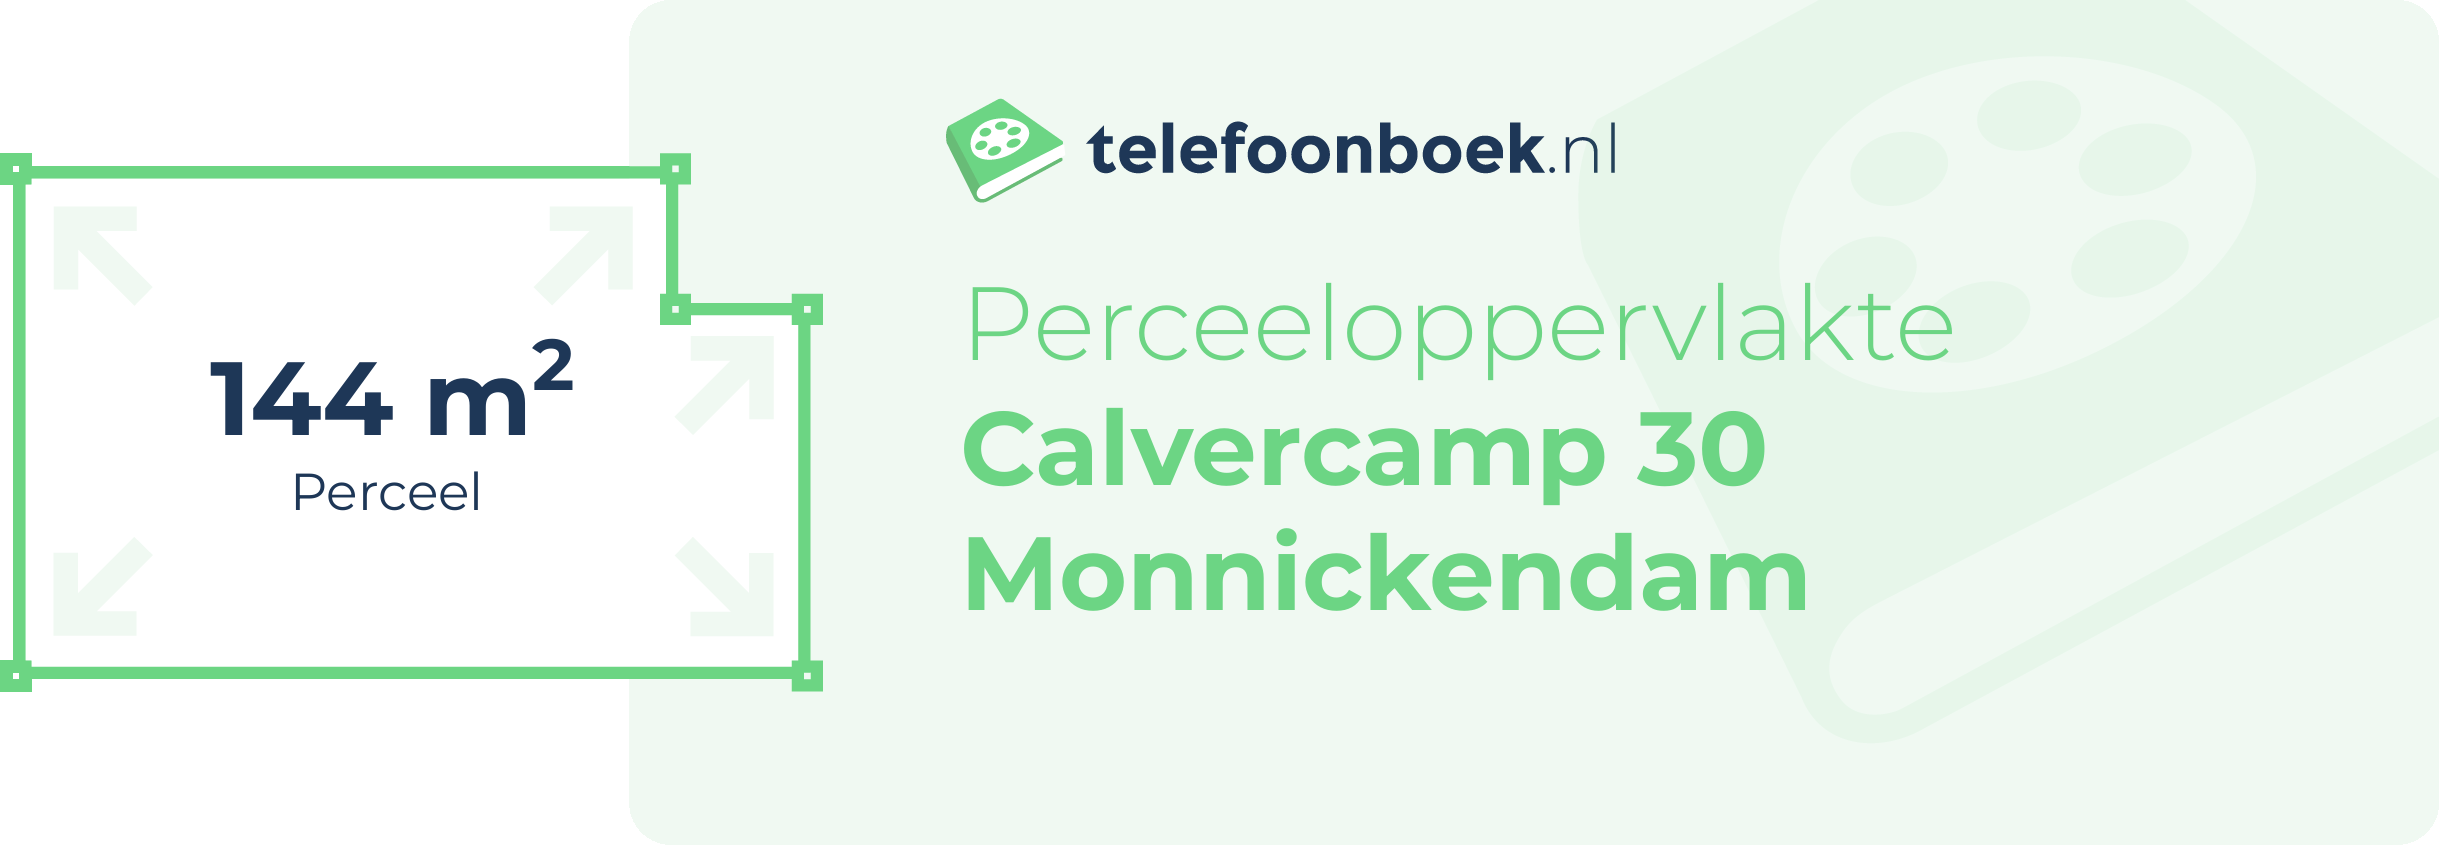 Perceeloppervlakte Calvercamp 30 Monnickendam